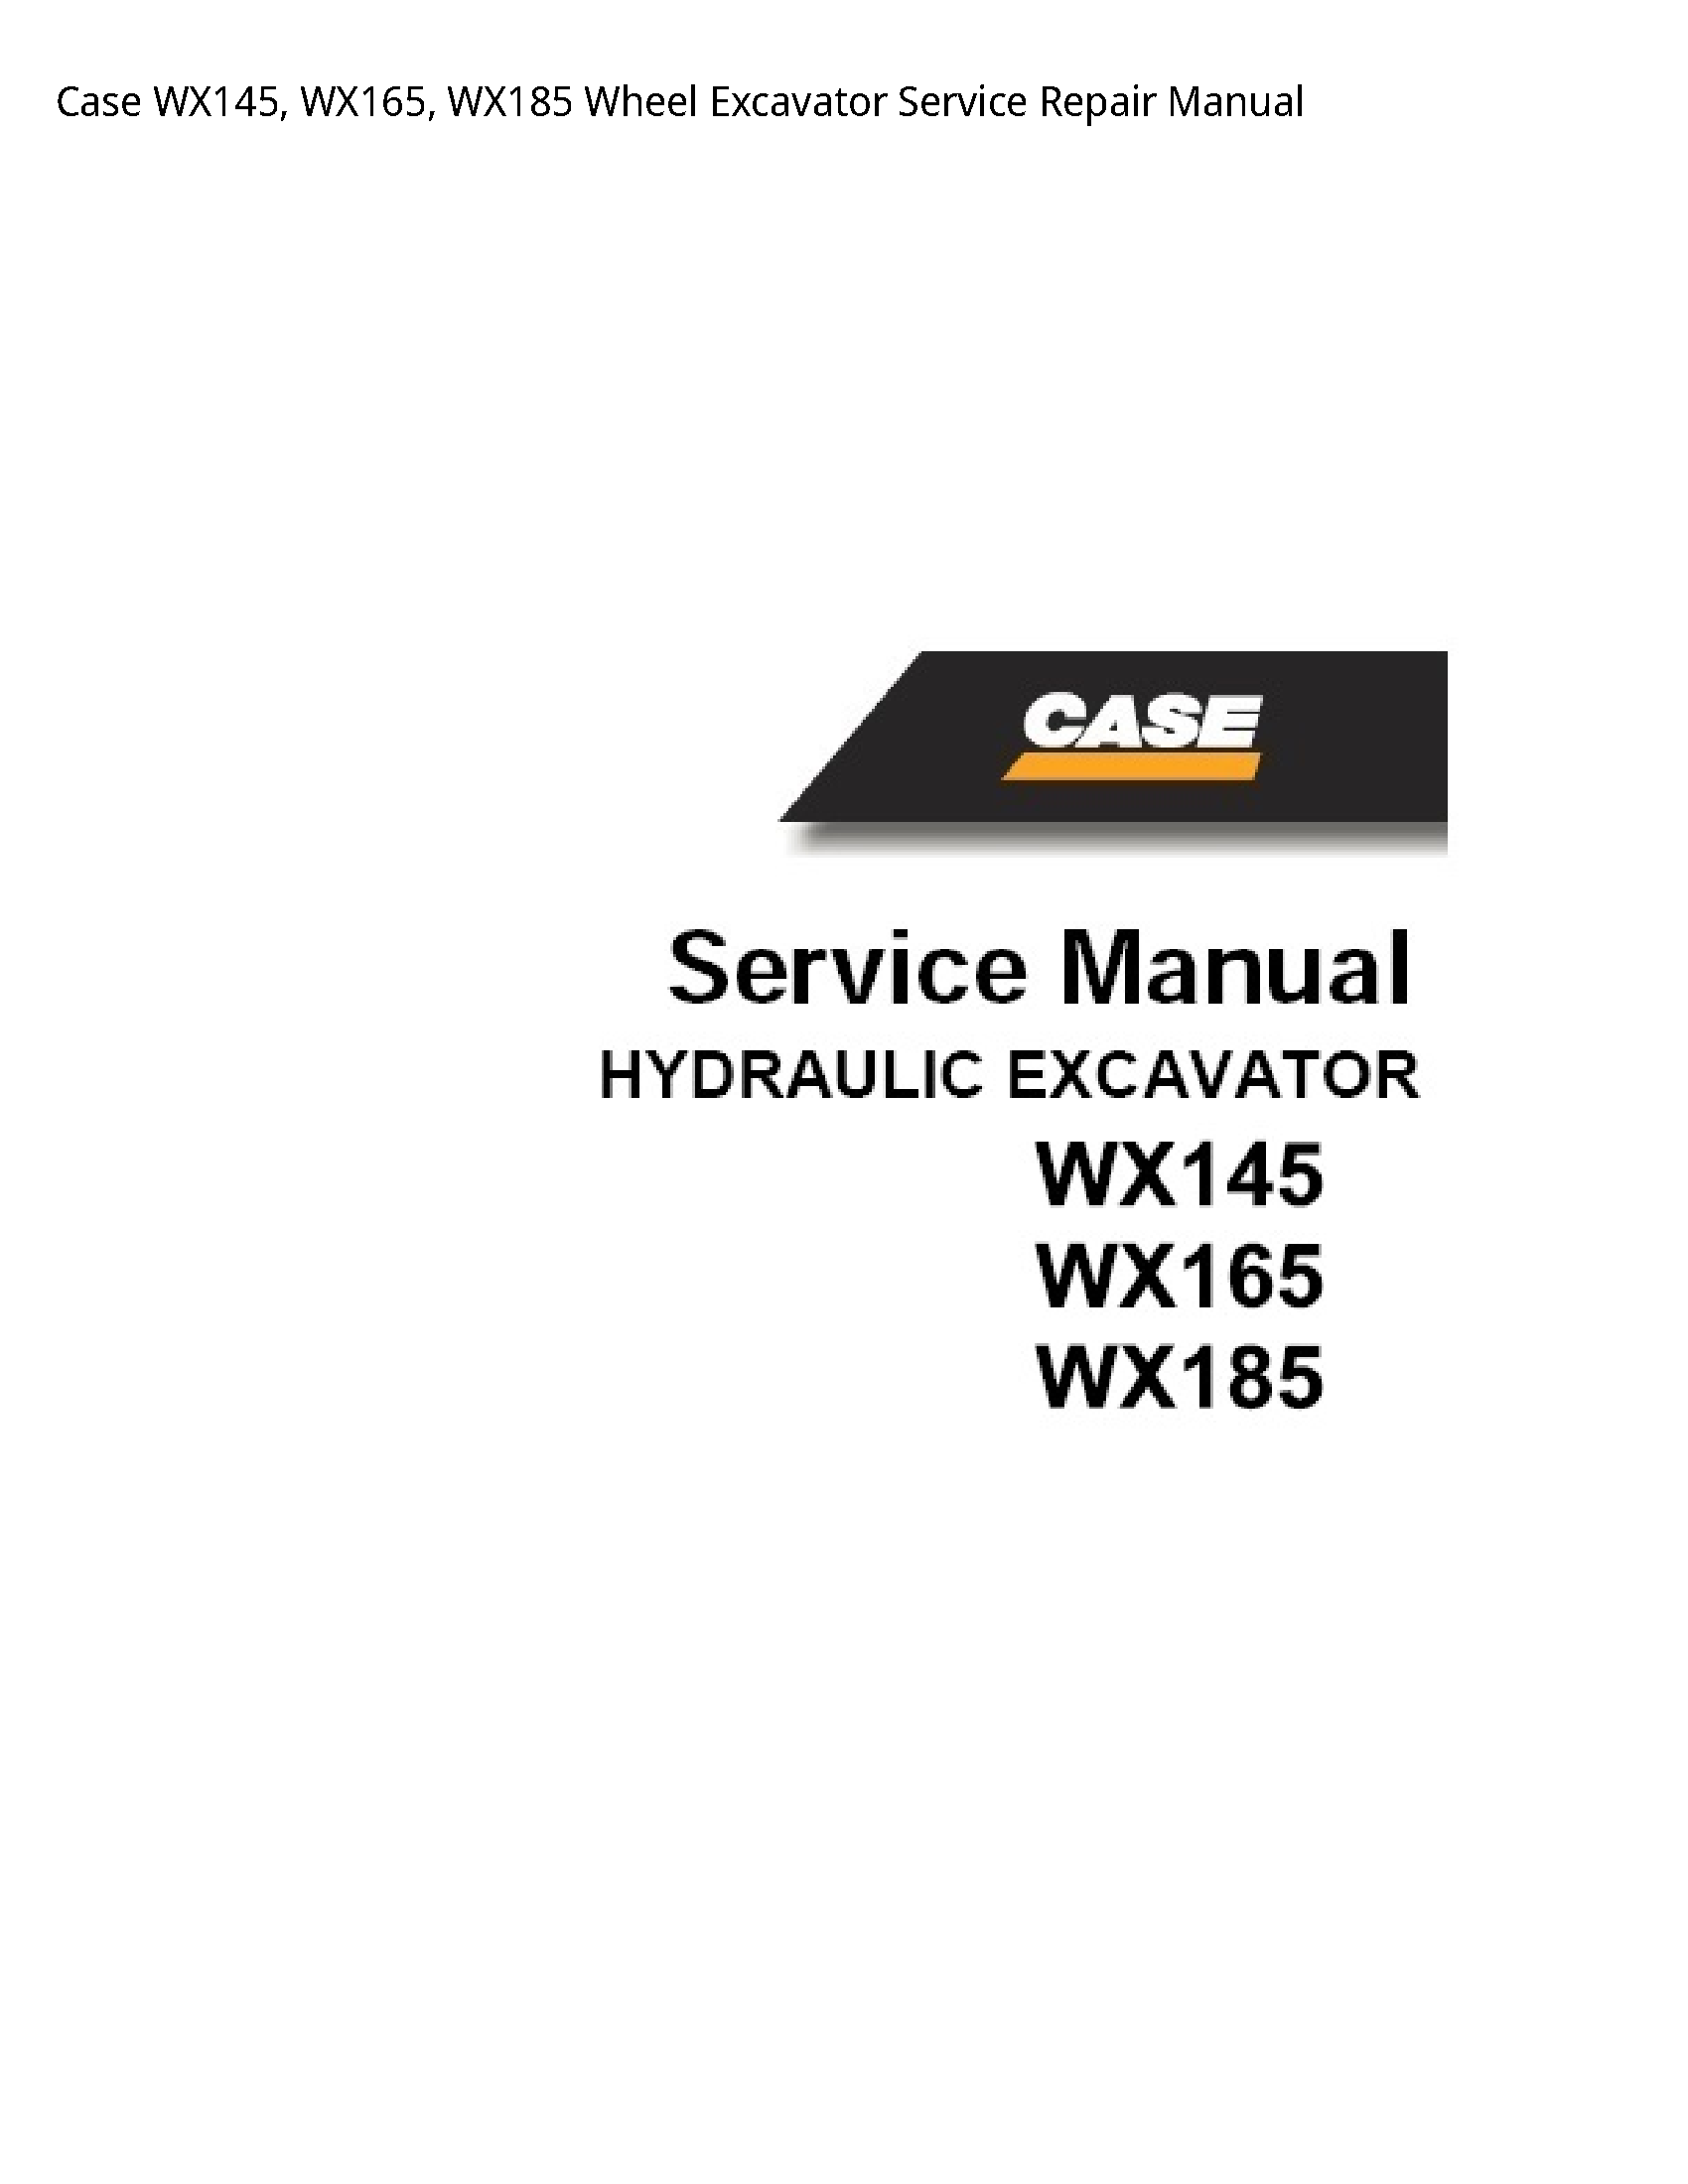 Case/Case IH WX145 Wheel Excavator manual